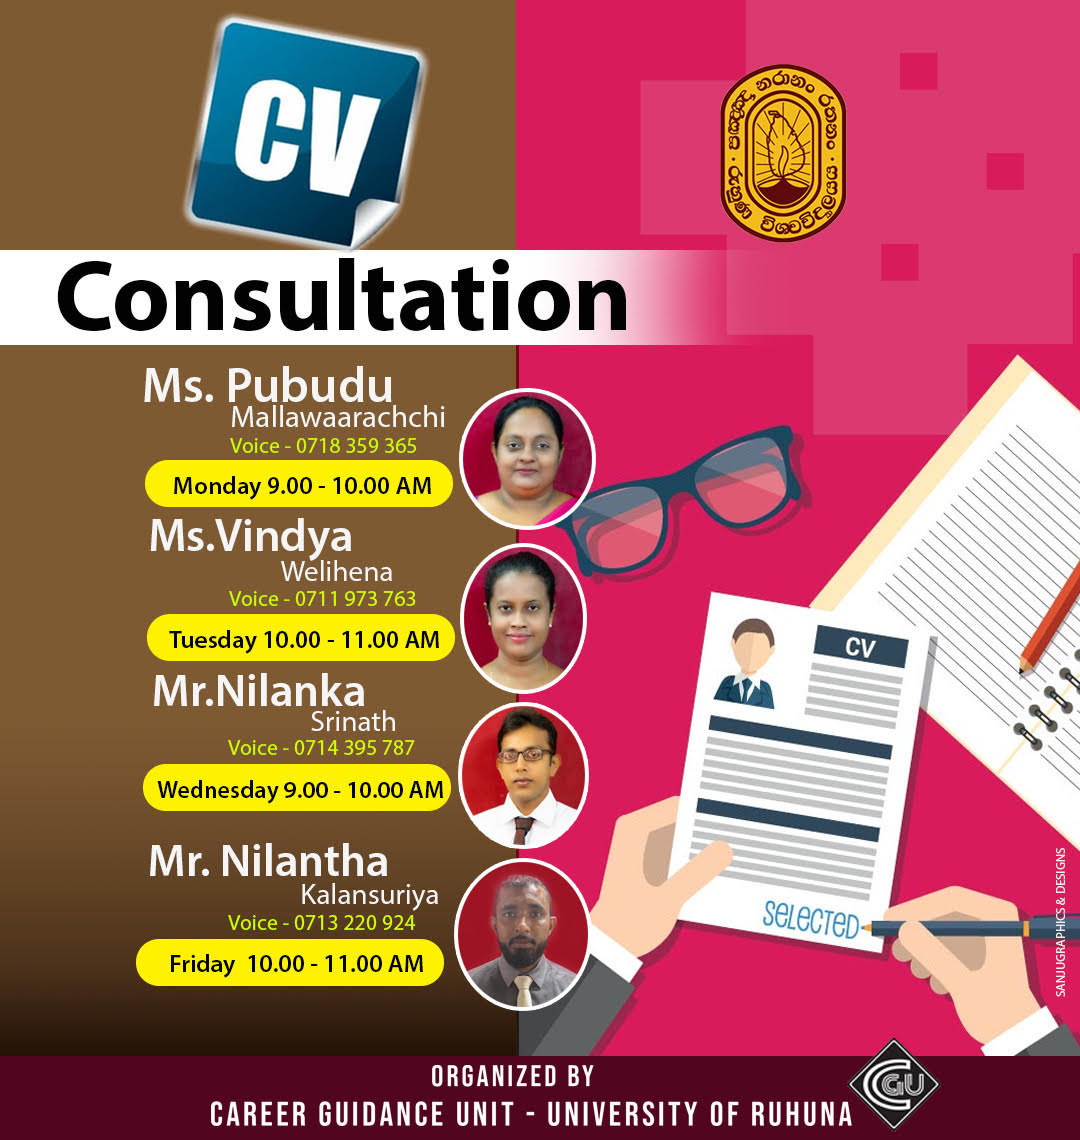 CV Consultation Service of the CGU